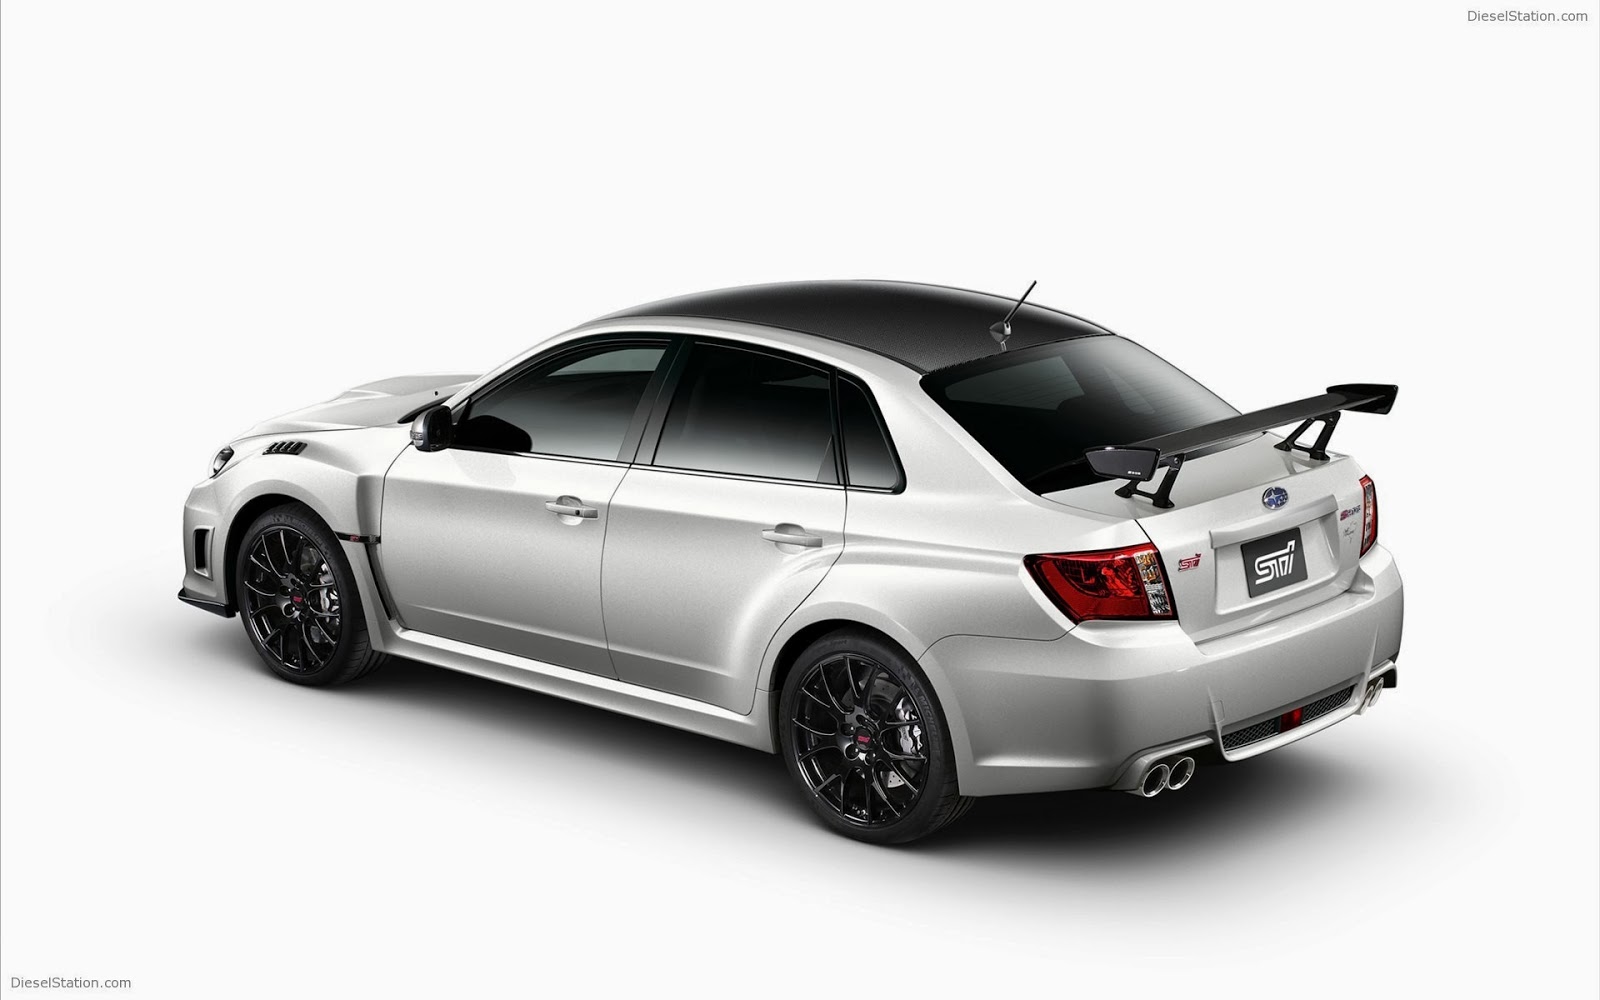 Subaru Impreza Wrx Sti Carbon Wallpaper Car Hq Photos For Your Device